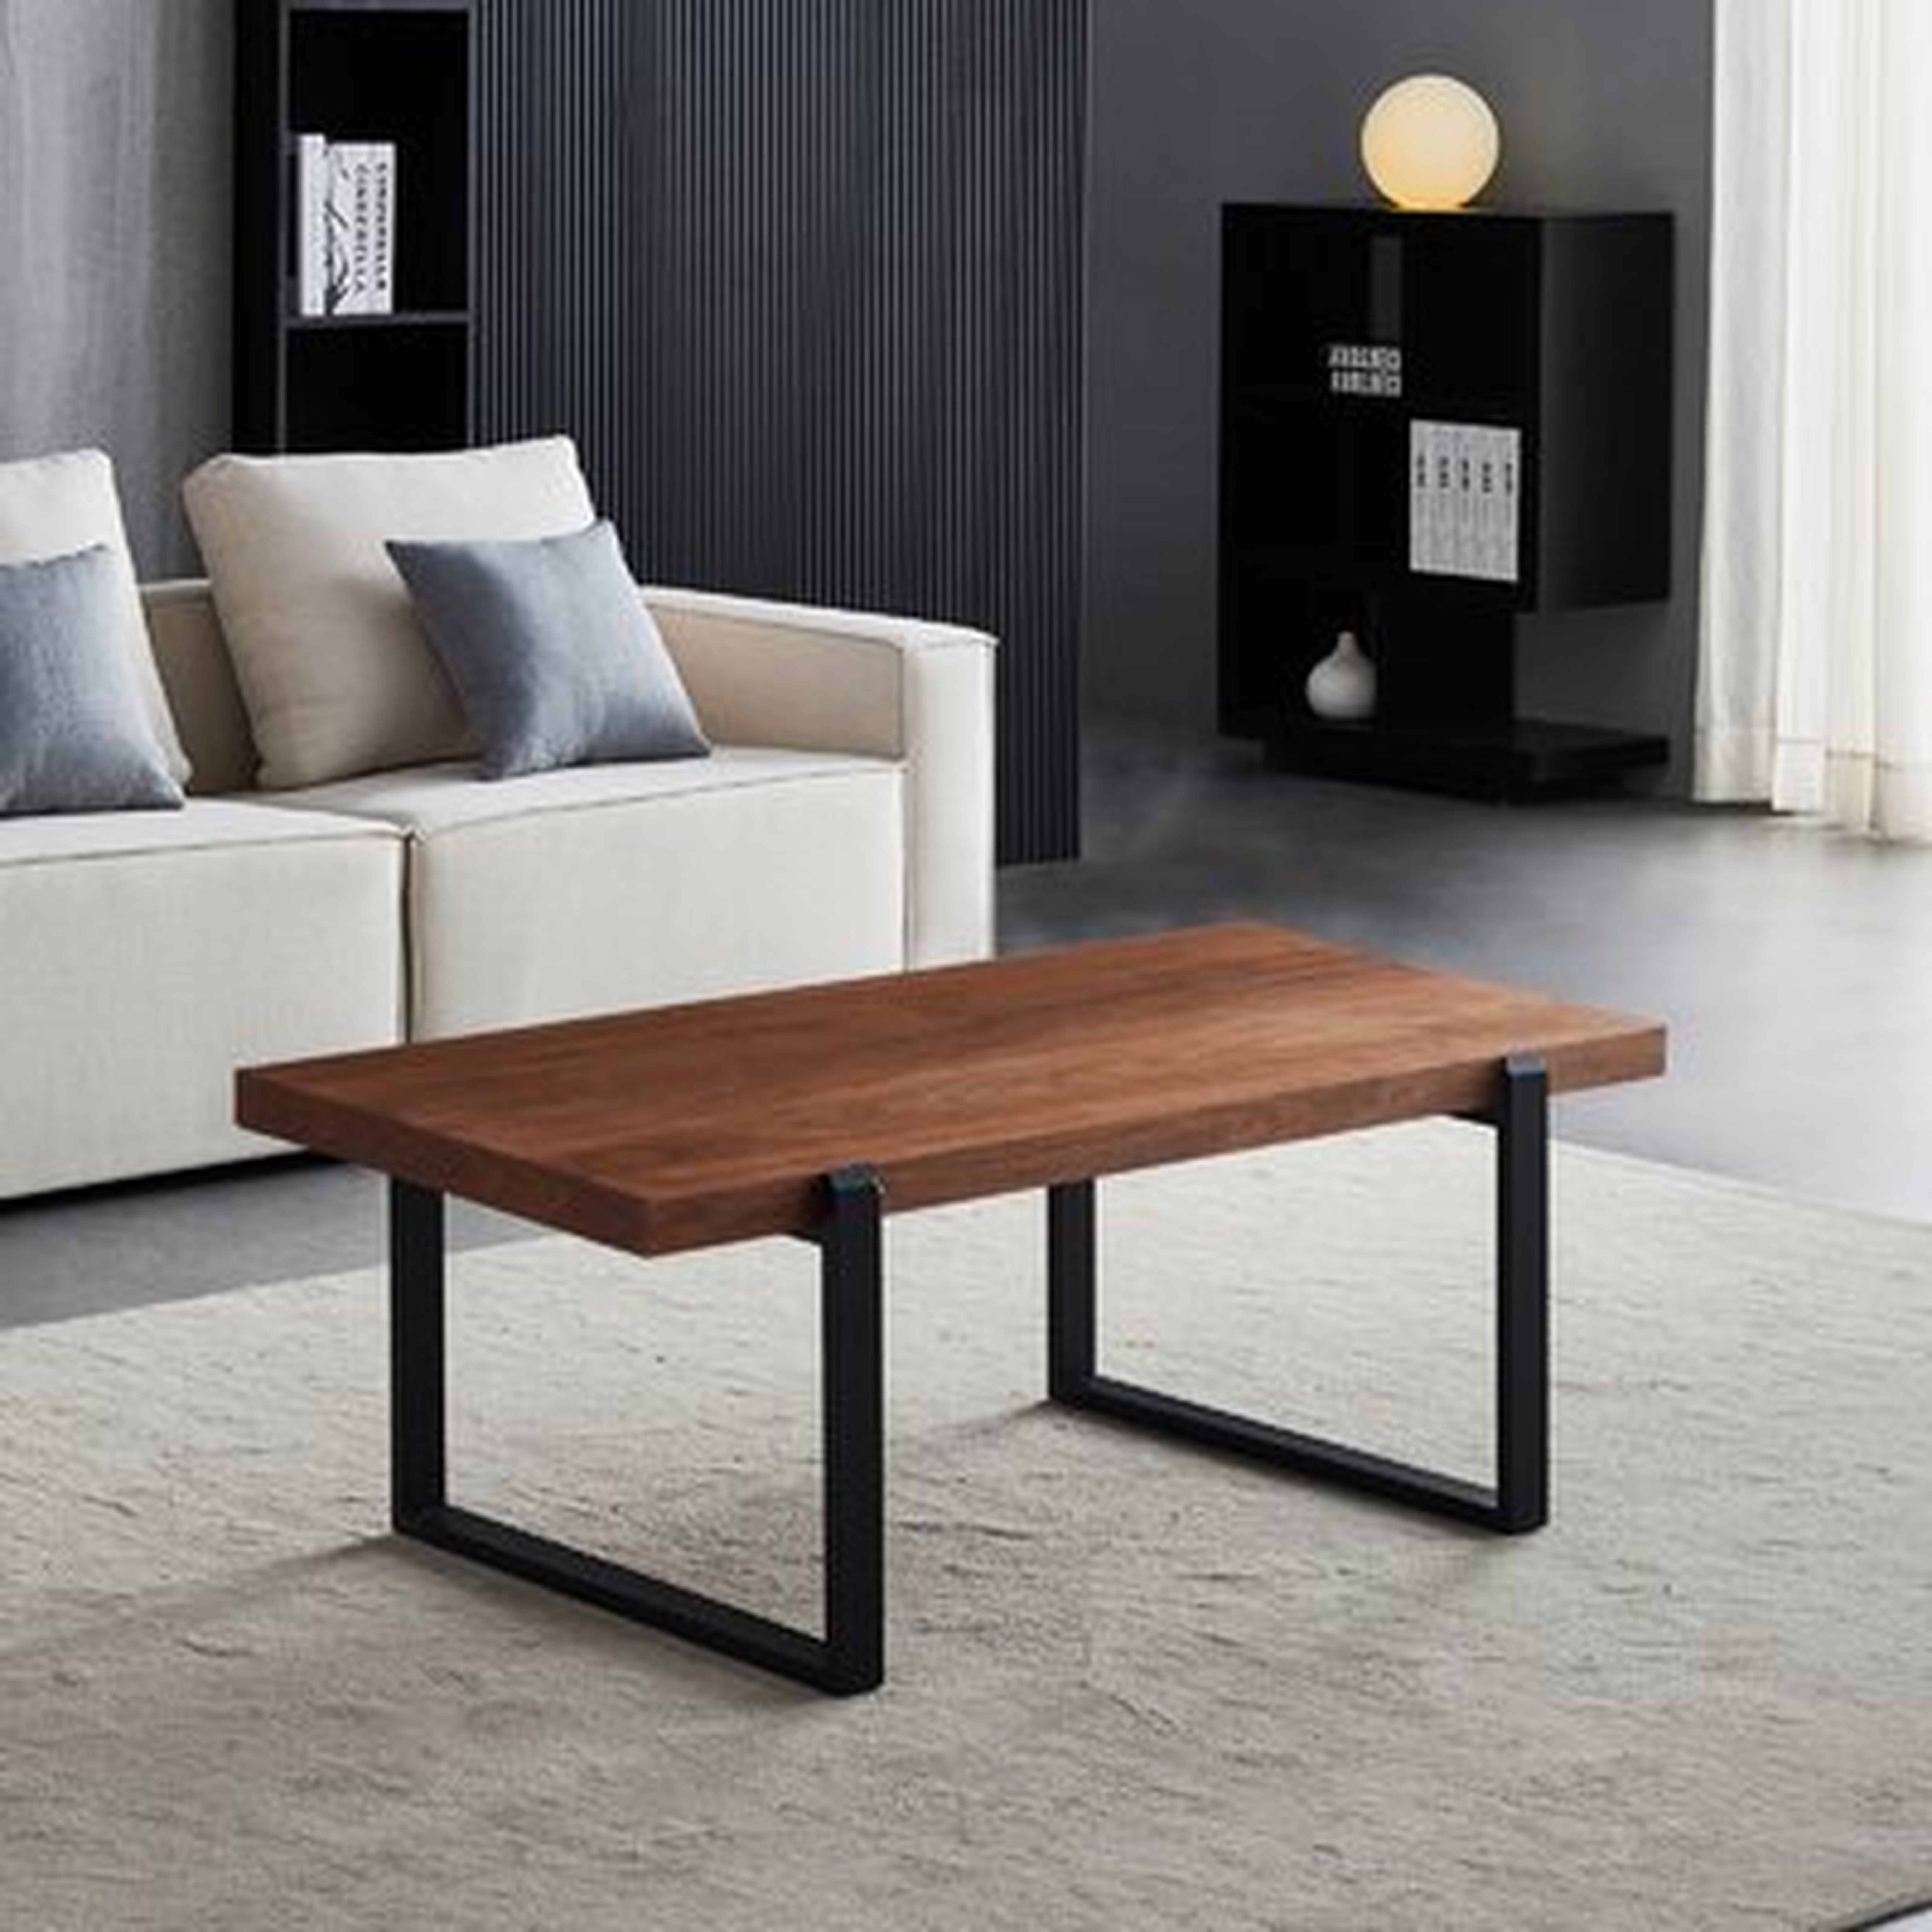 Rustic Coffee Table, Black Metal Frame Minimalist Table, Modern Wood Rectangle Coffee Table, Walnut Top - Wayfair